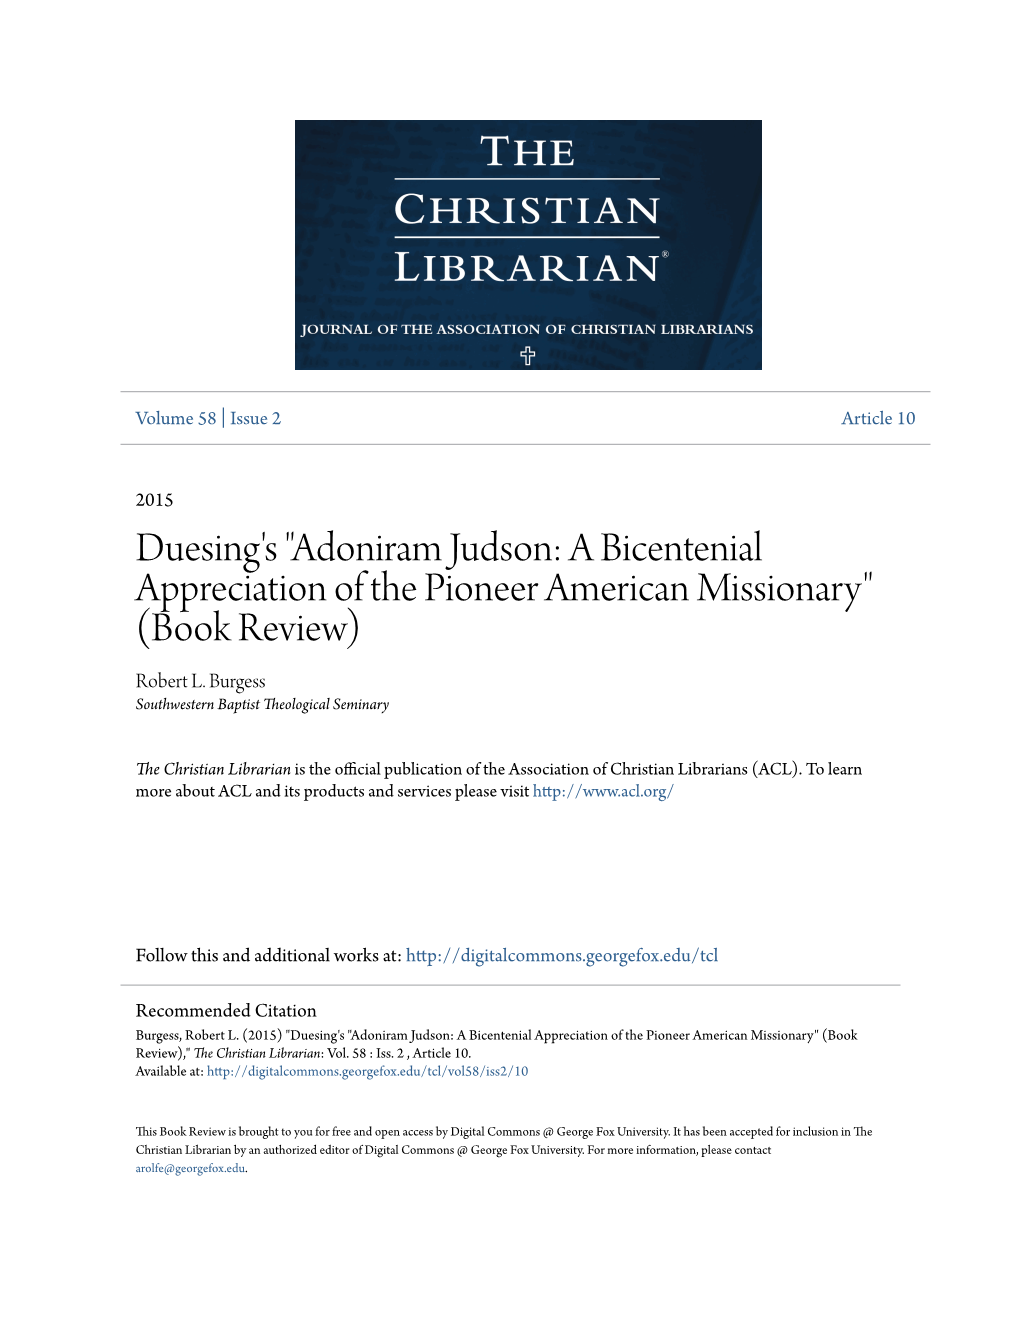 "Adoniram Judson: a Bicentenial Appreciation of the Pioneer American Missionary" (Book Review) Robert L